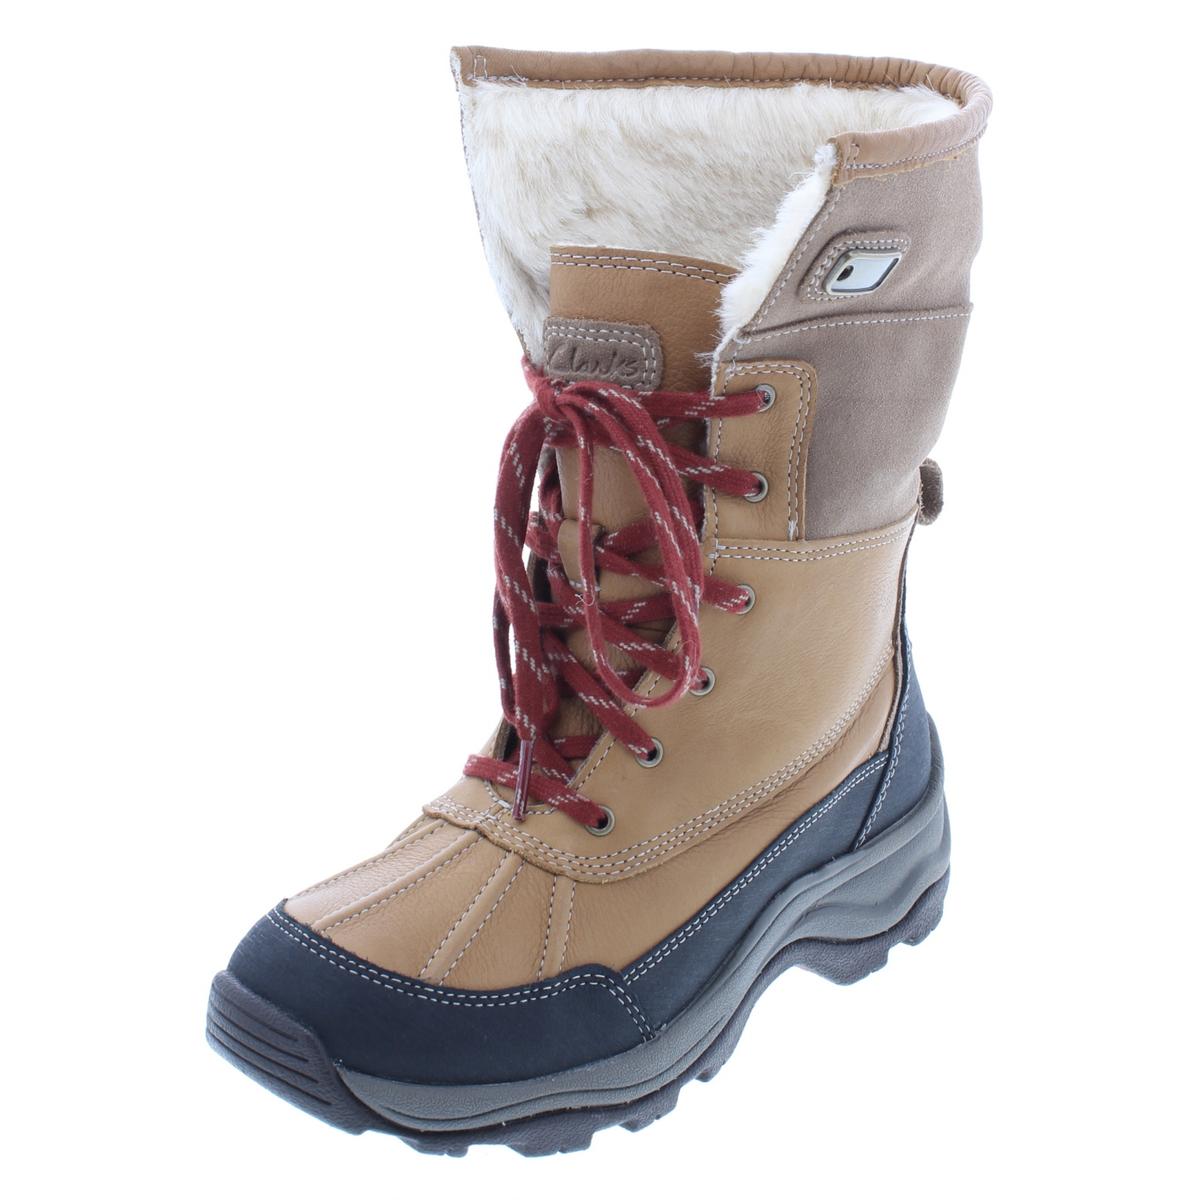 clarks womens winter boots